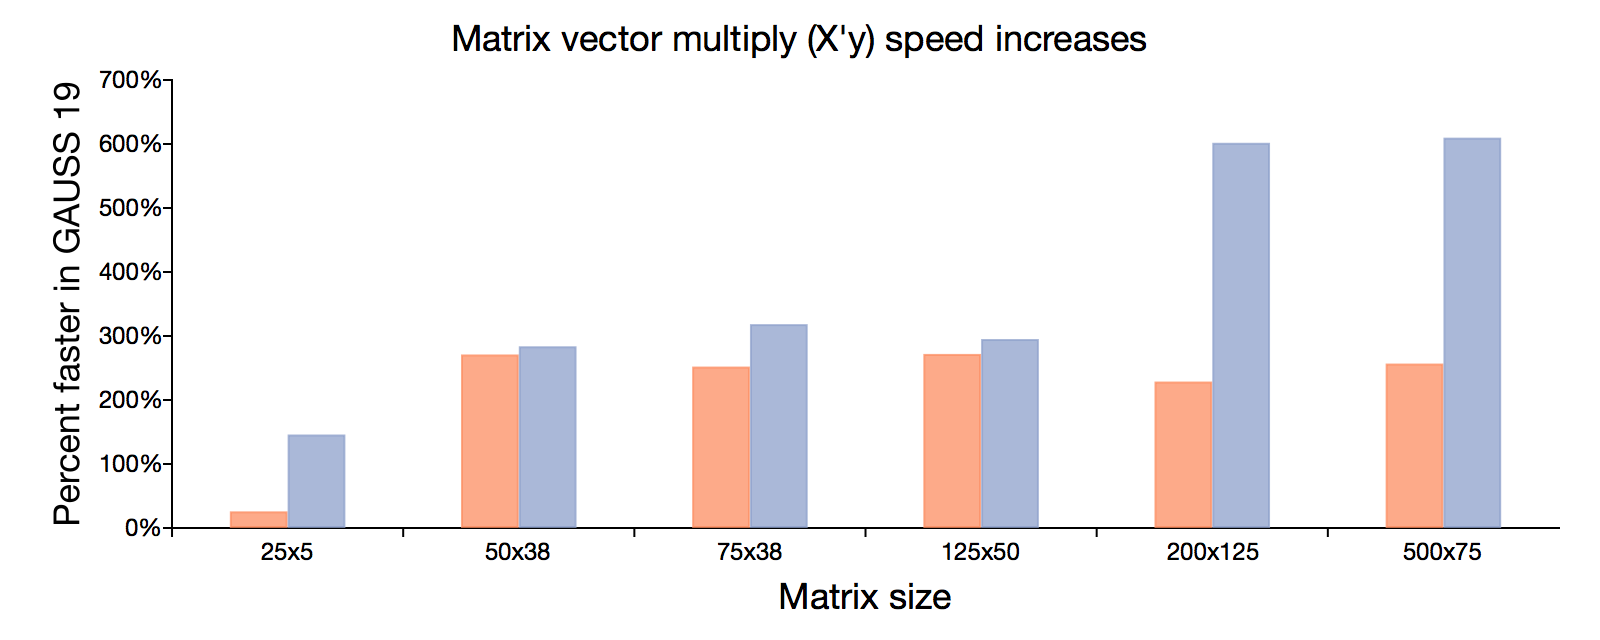 Matrix vector multiply speed-ups in GAUSS 19.